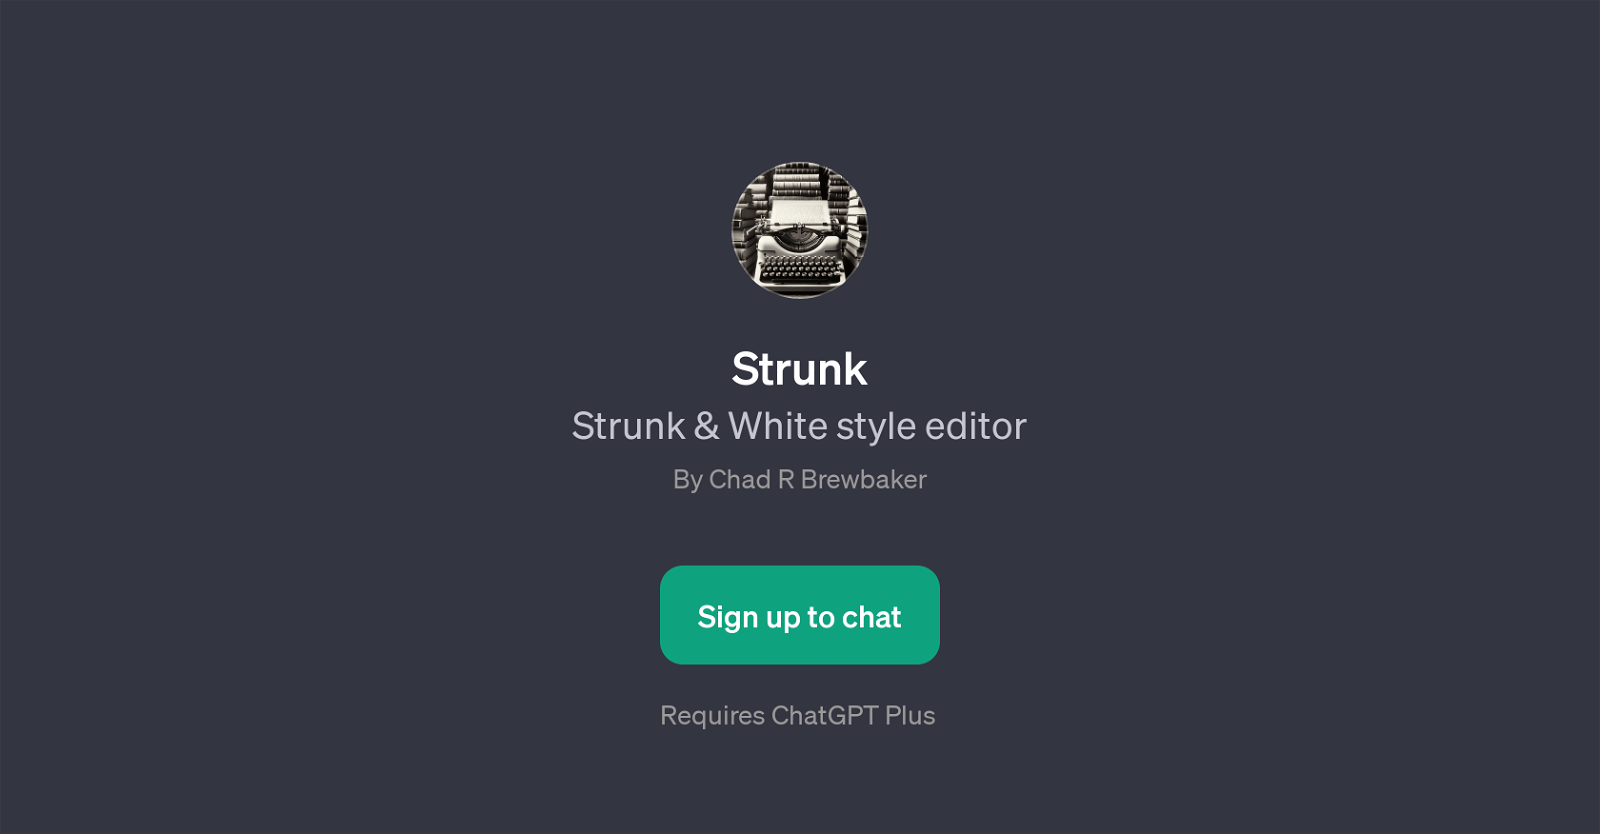 Strunk website